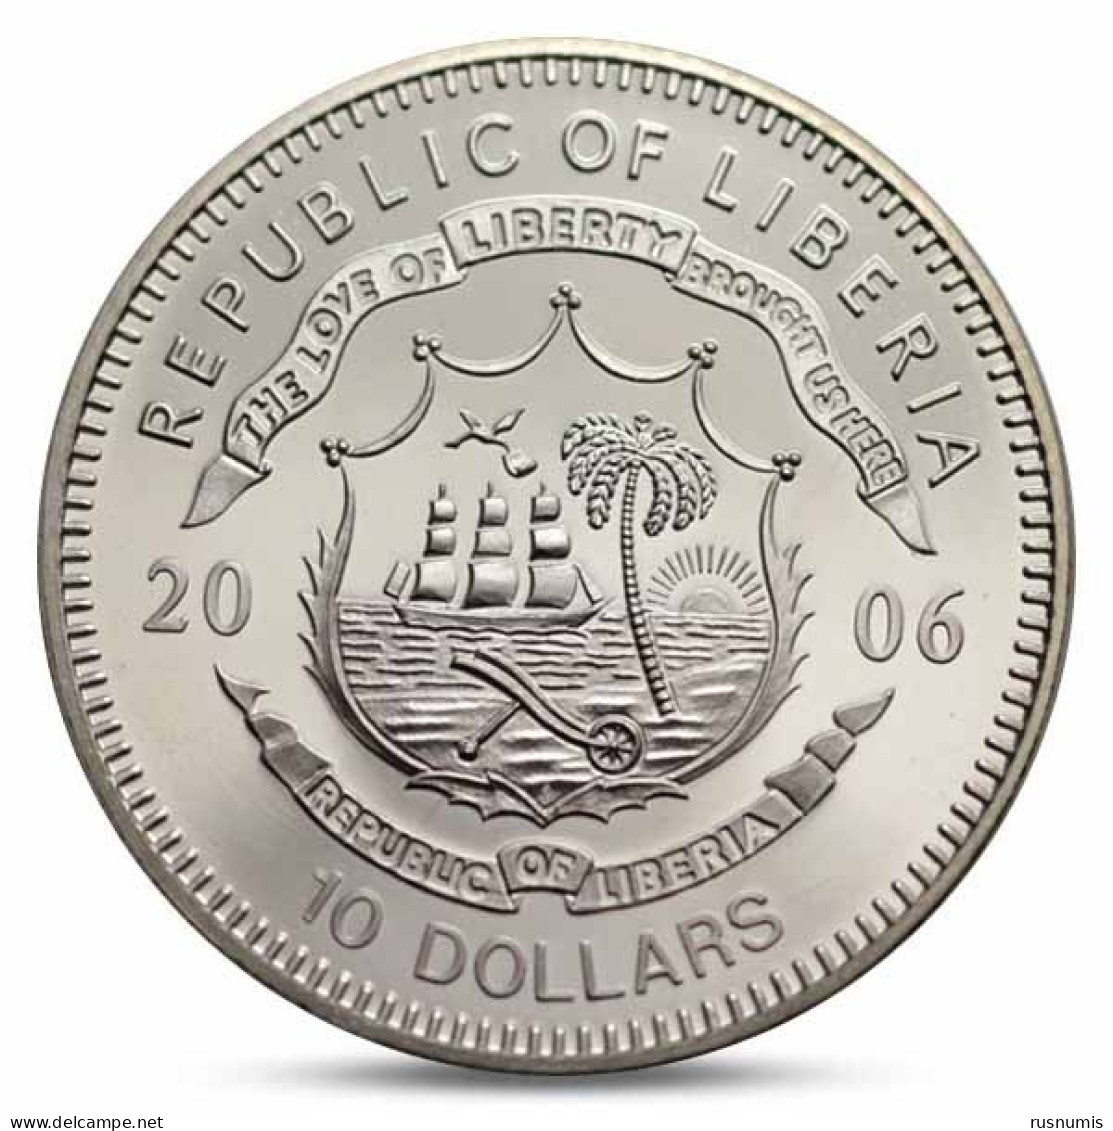 LIBERIA 10 DOLLARS MOMENTS OF FREEDOM - RECAPTURE OF BUDA 1686 HUNGARY 2006 - Liberia